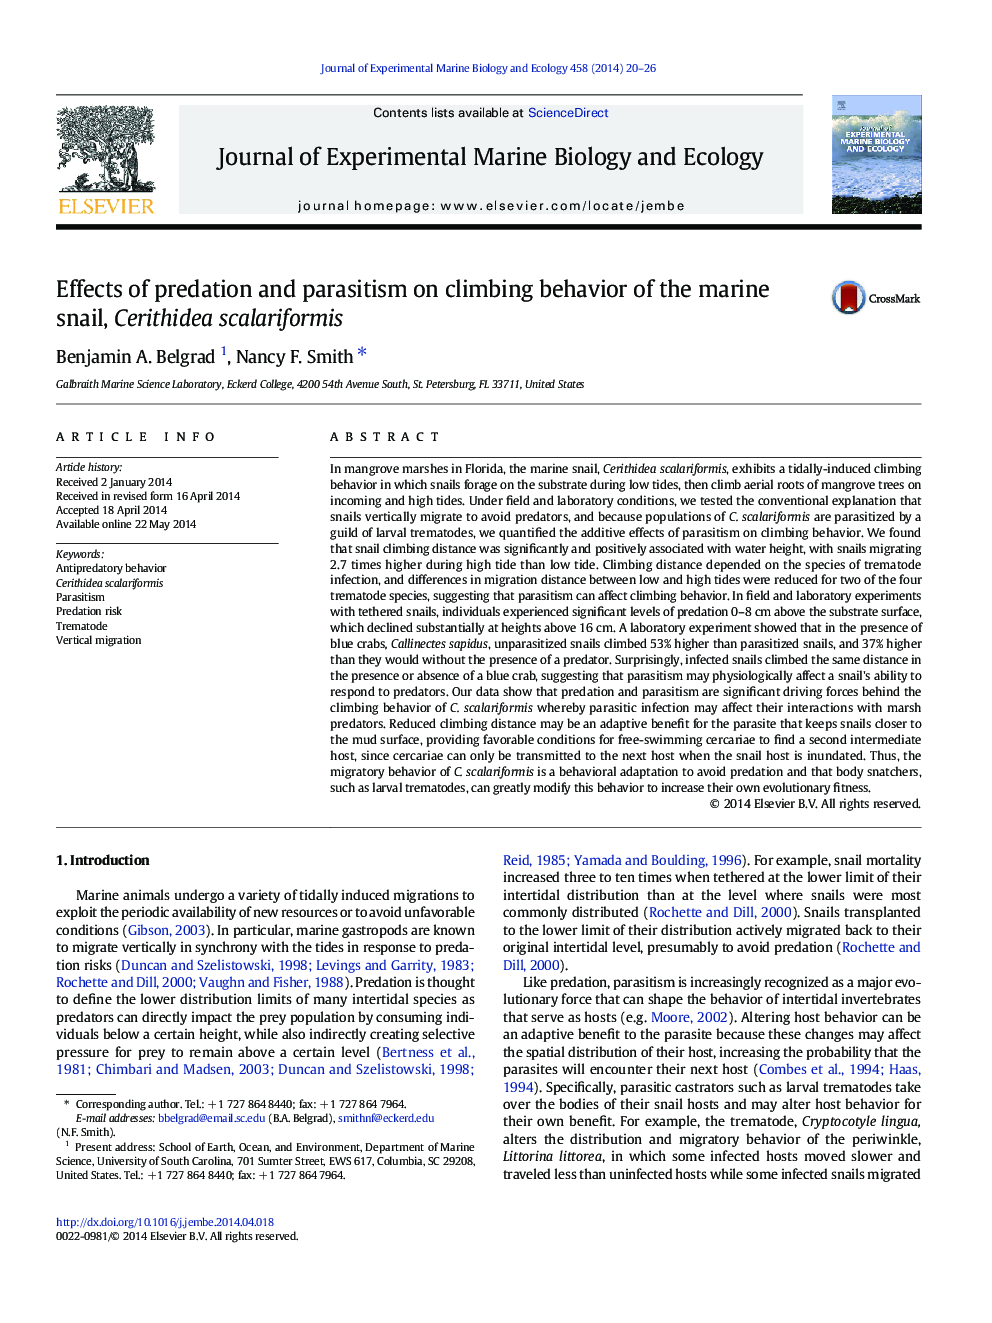 Effects of predation and parasitism on climbing behavior of the marine snail, Cerithidea scalariformis